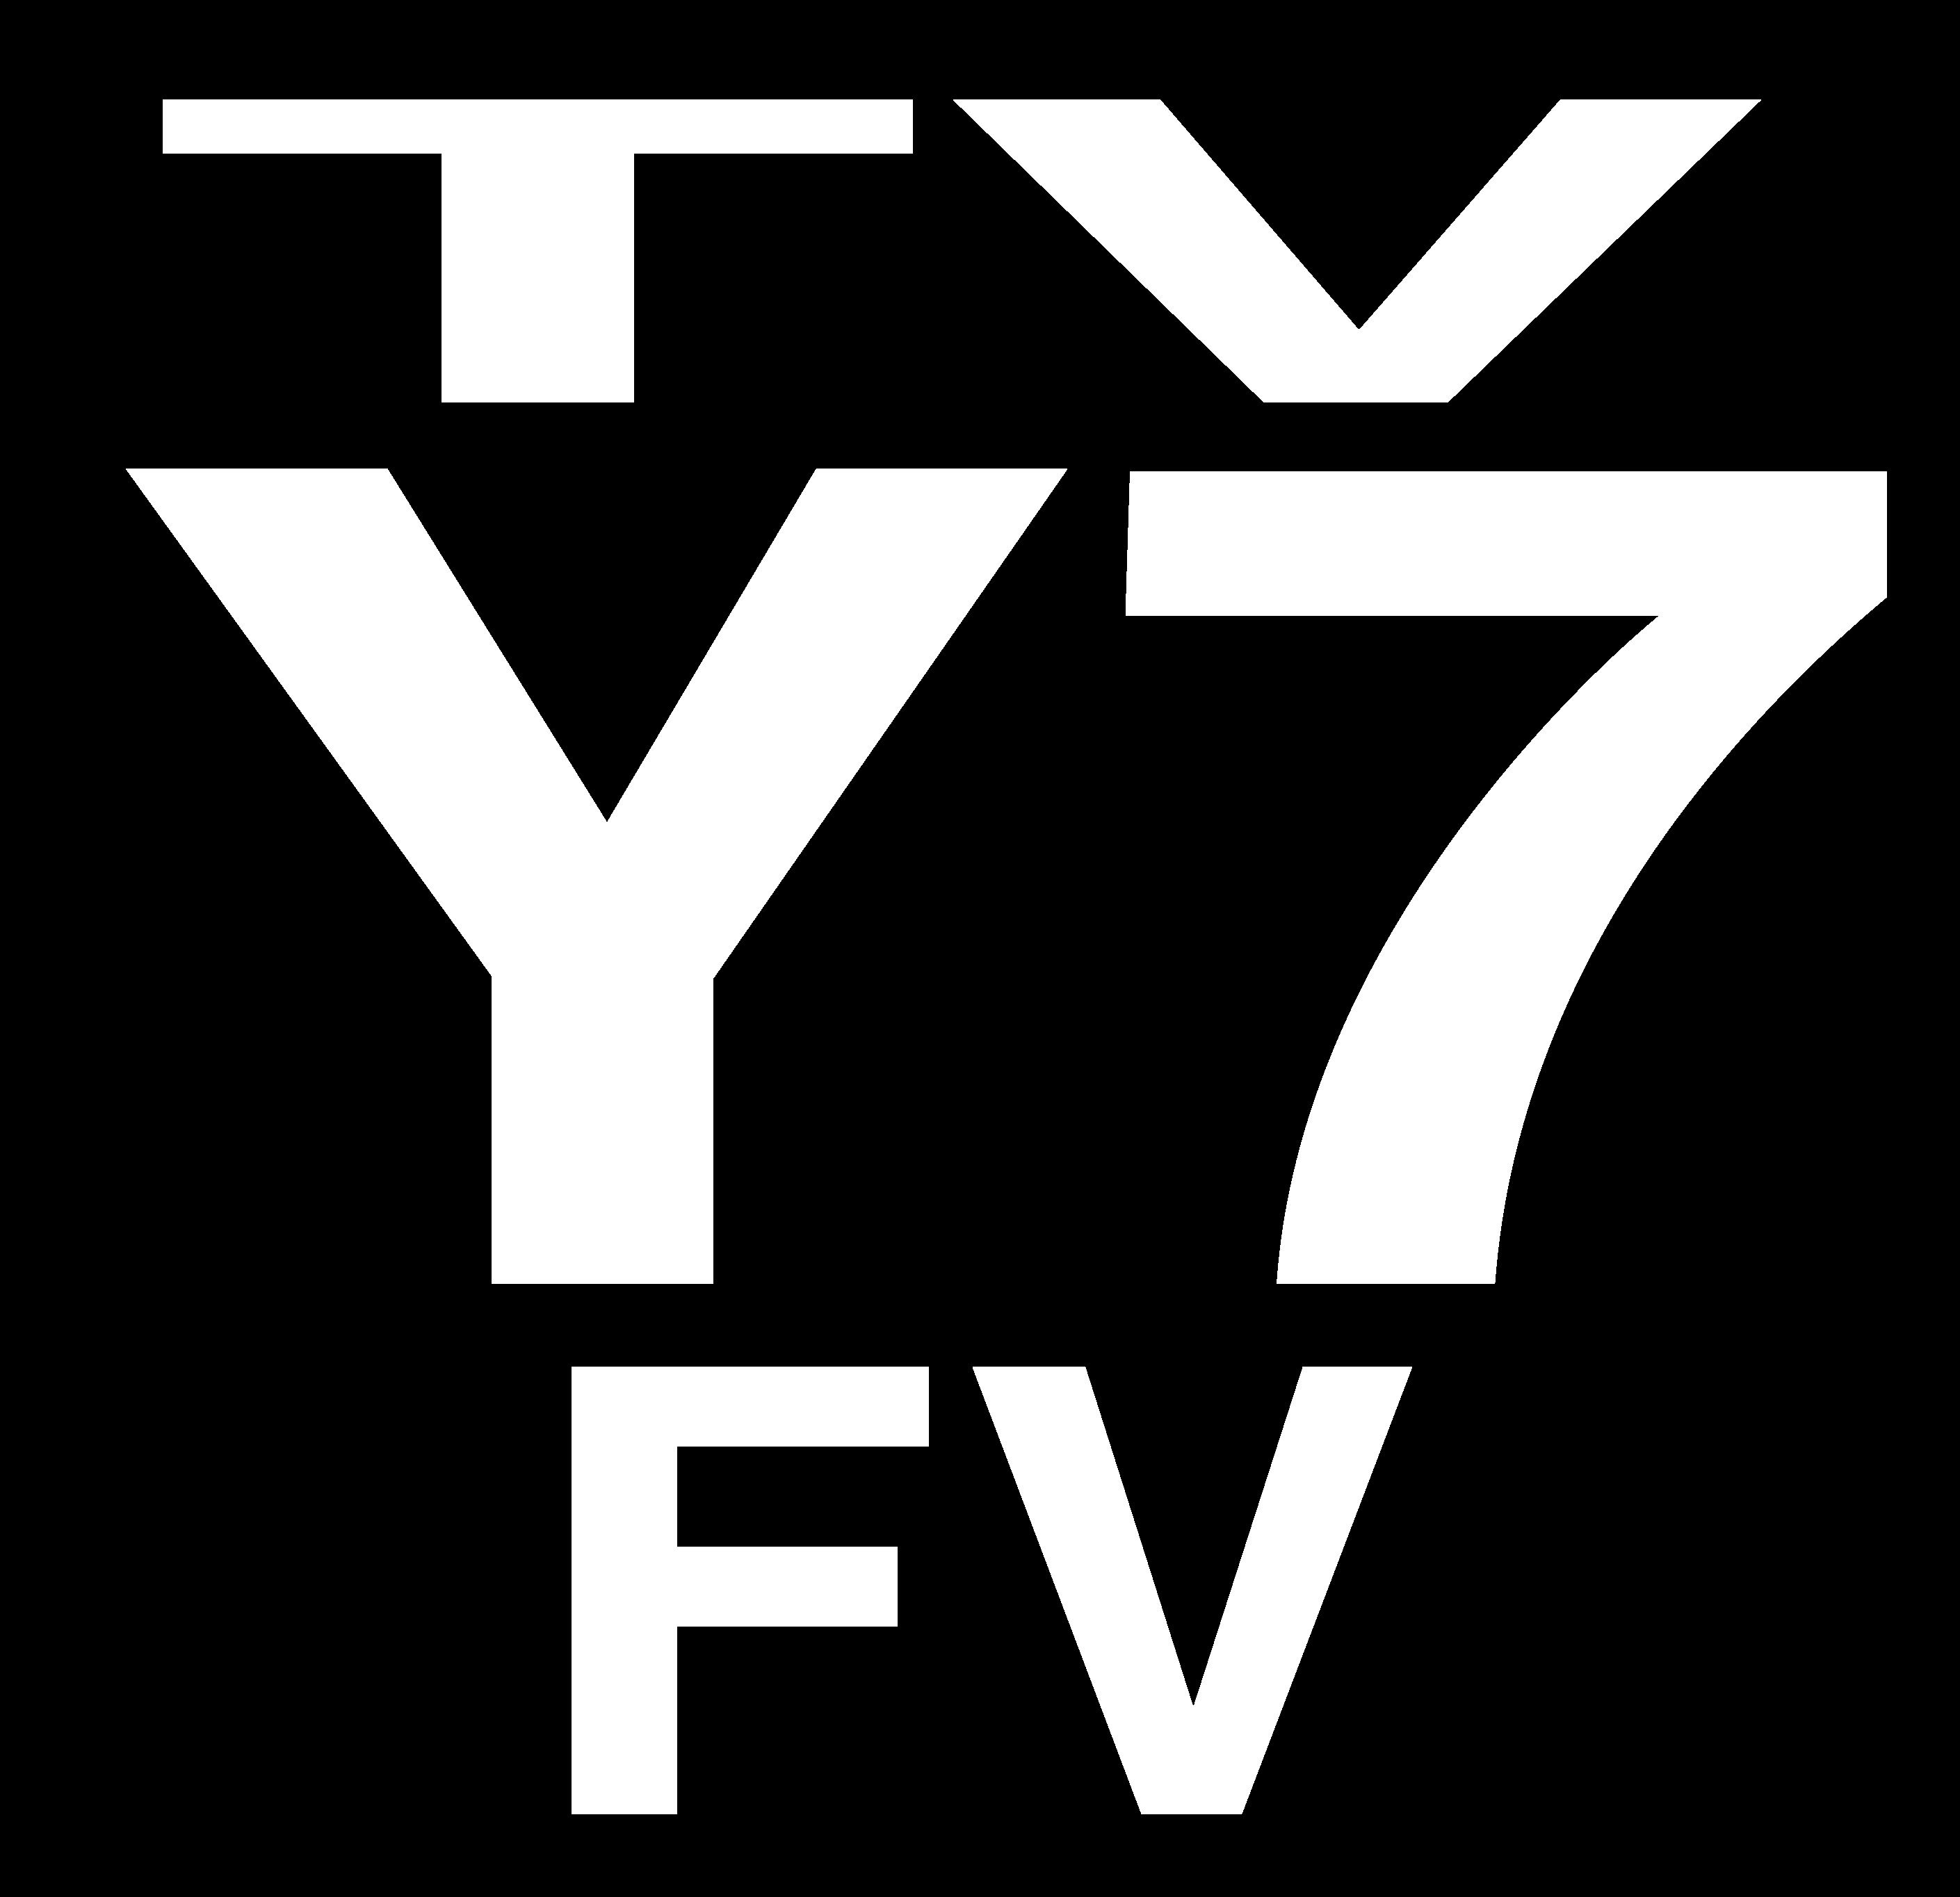 TV-Y7 CC Logo - File:Black TV-Y7-FV icon.png - Wikimedia Commons